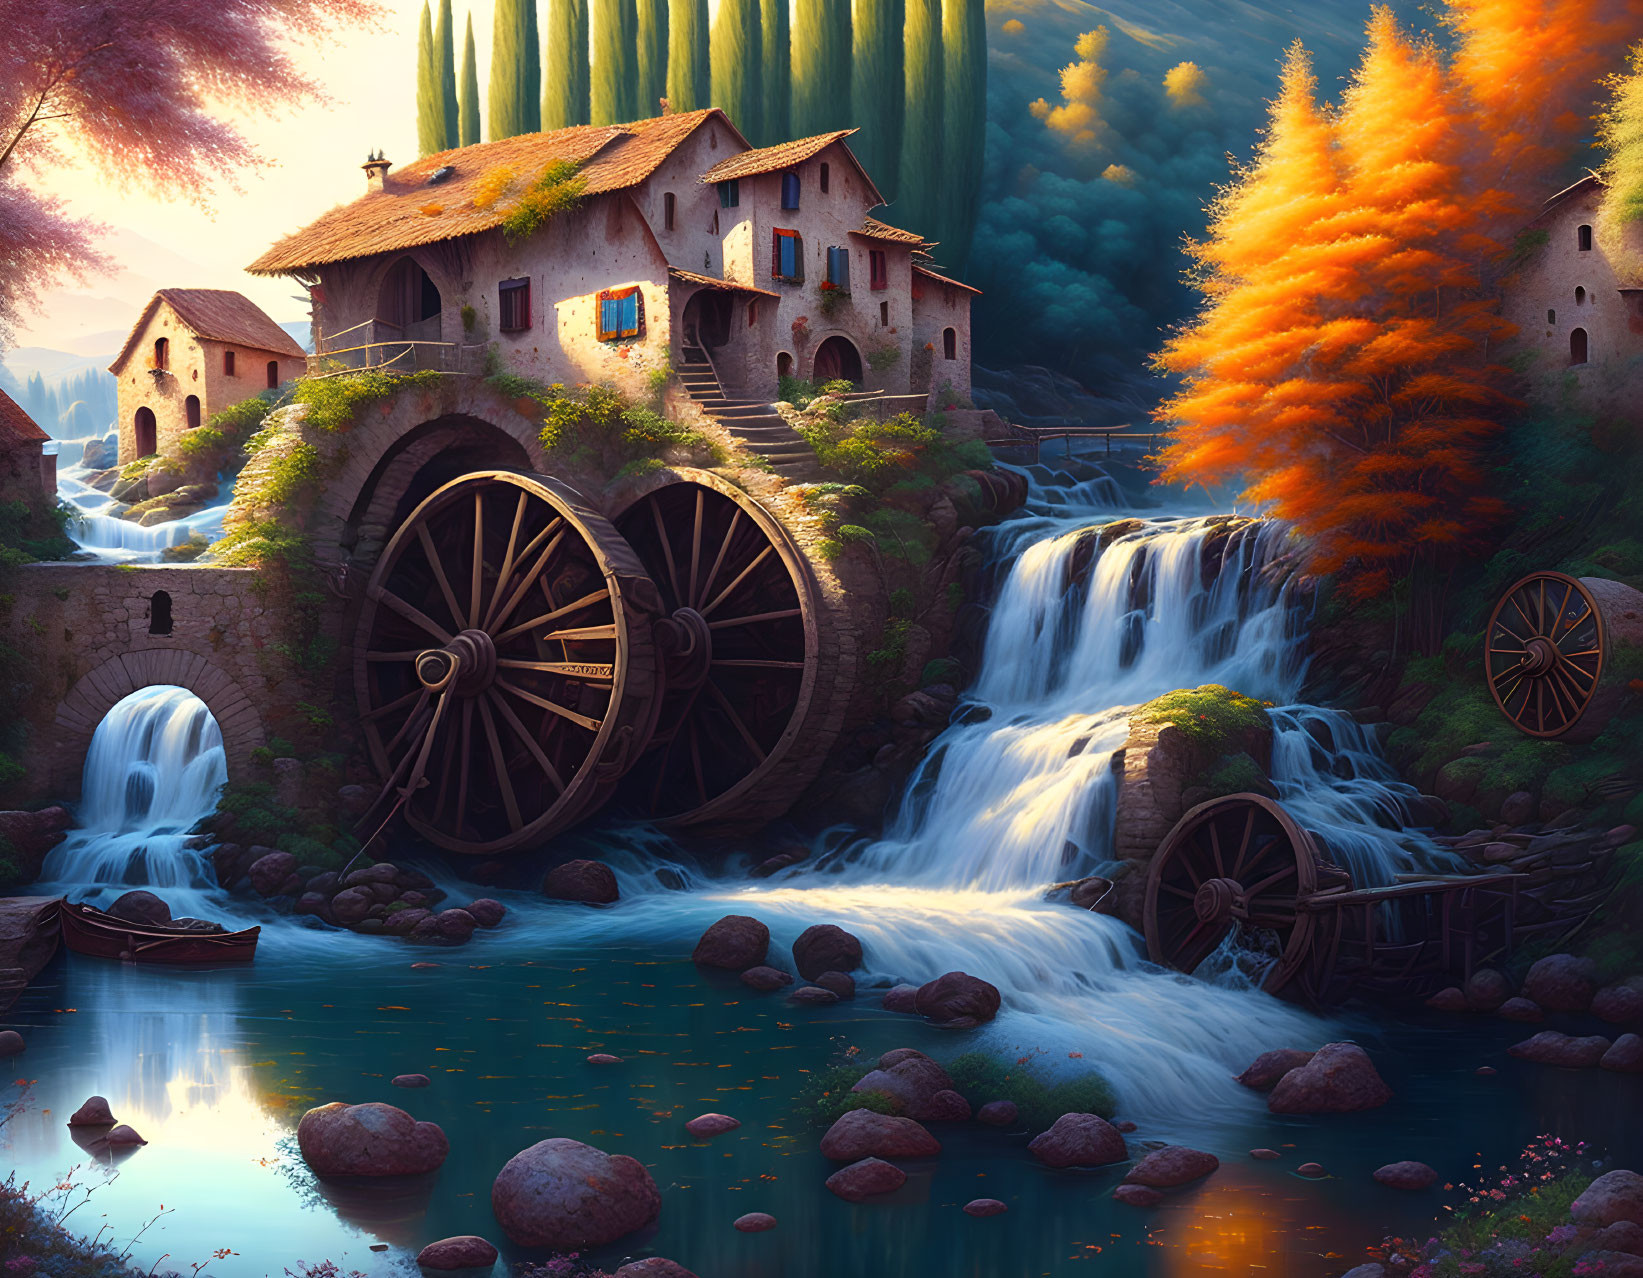 Stone houses on waterfall with waterwheels, autumn foliage, warm light